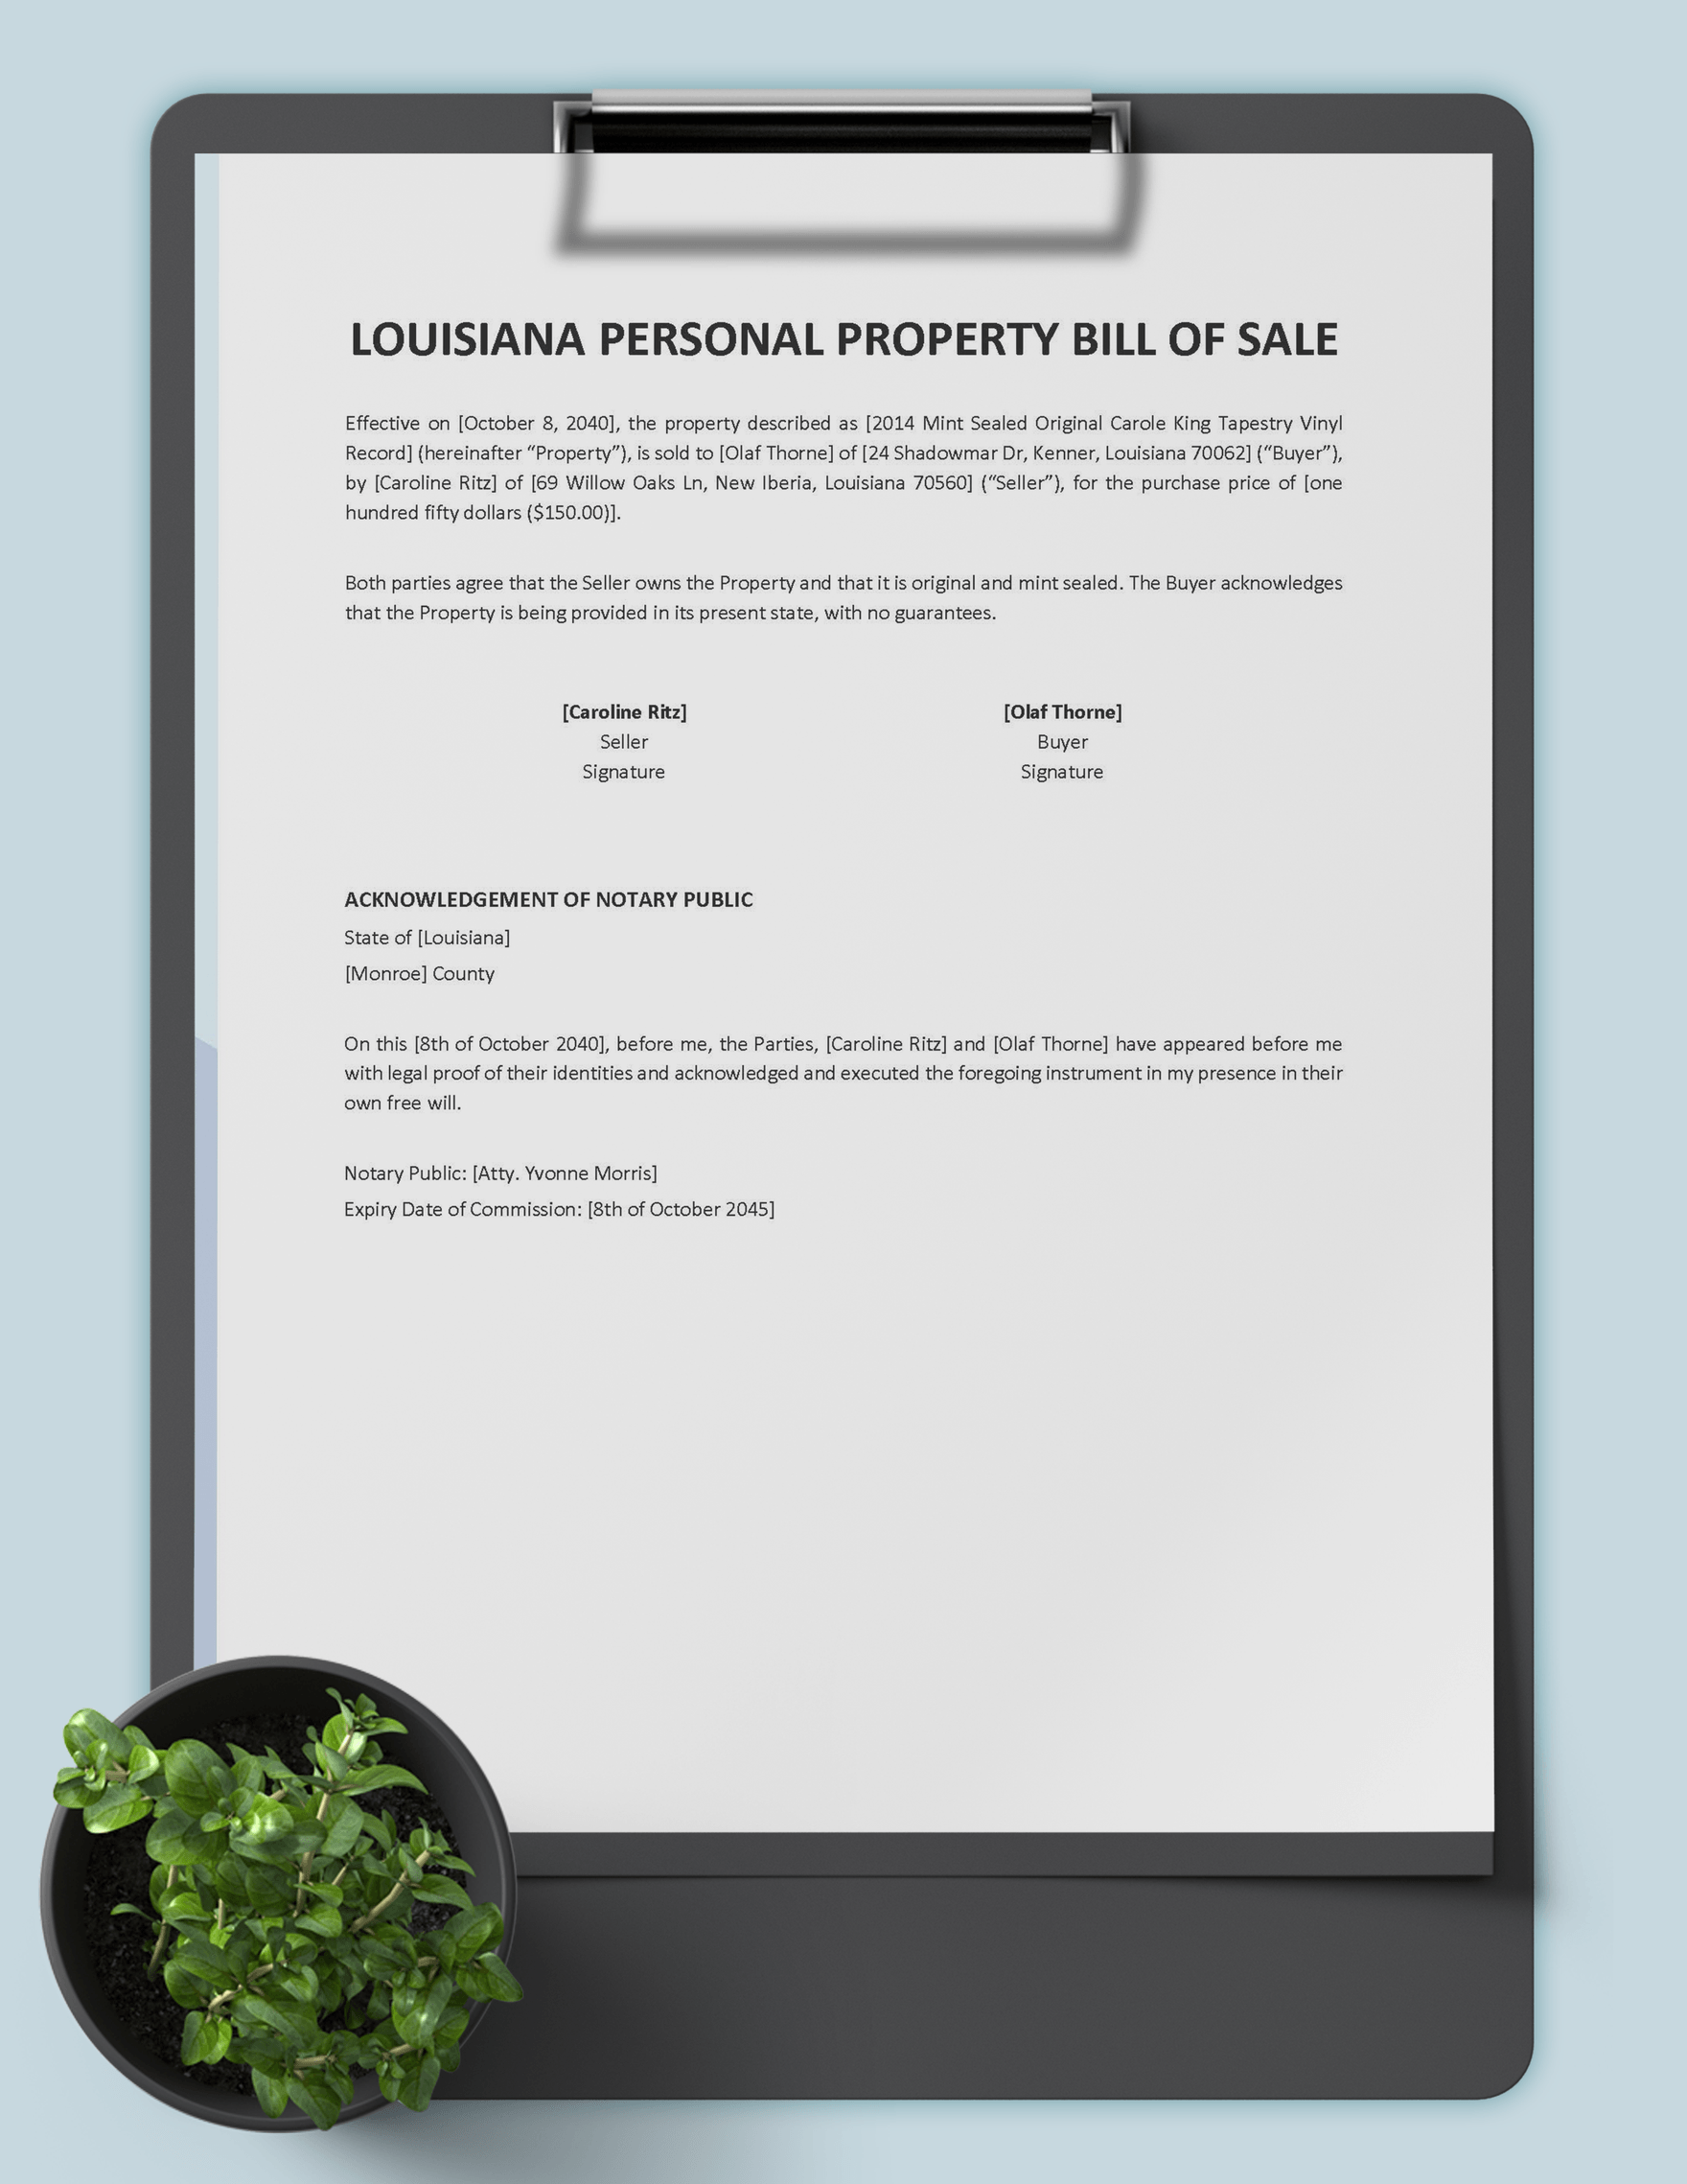 Louisiana Personal Property Bill of Sale Template